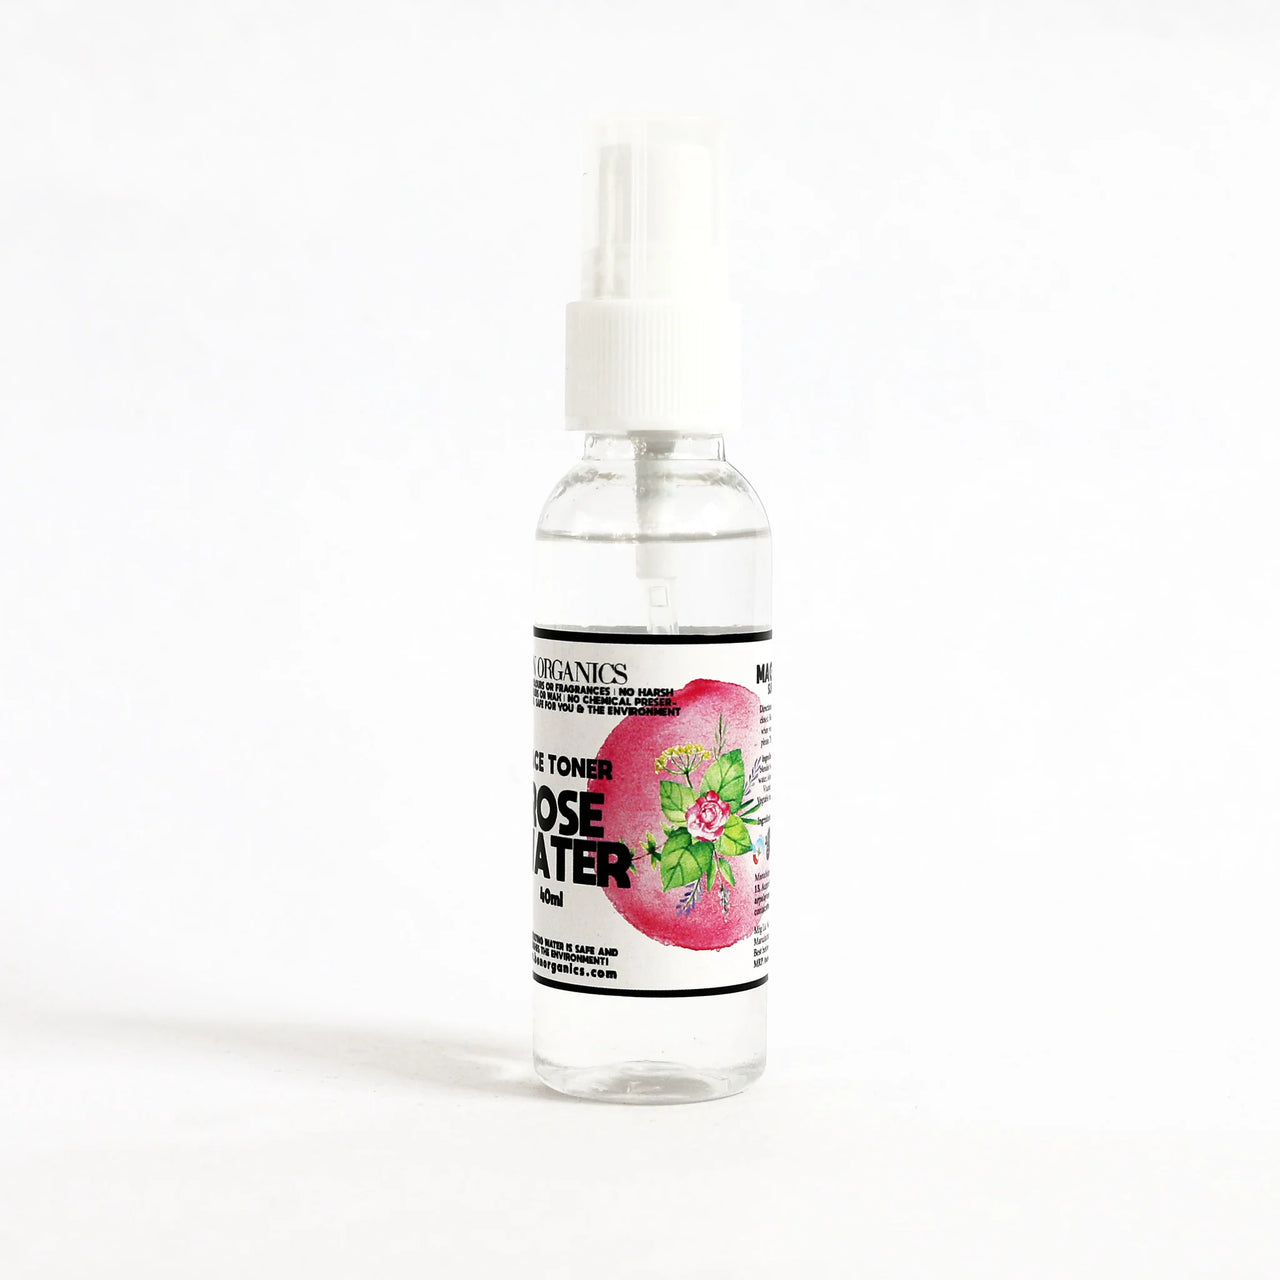 BON - Organic Face Toner - Rose water